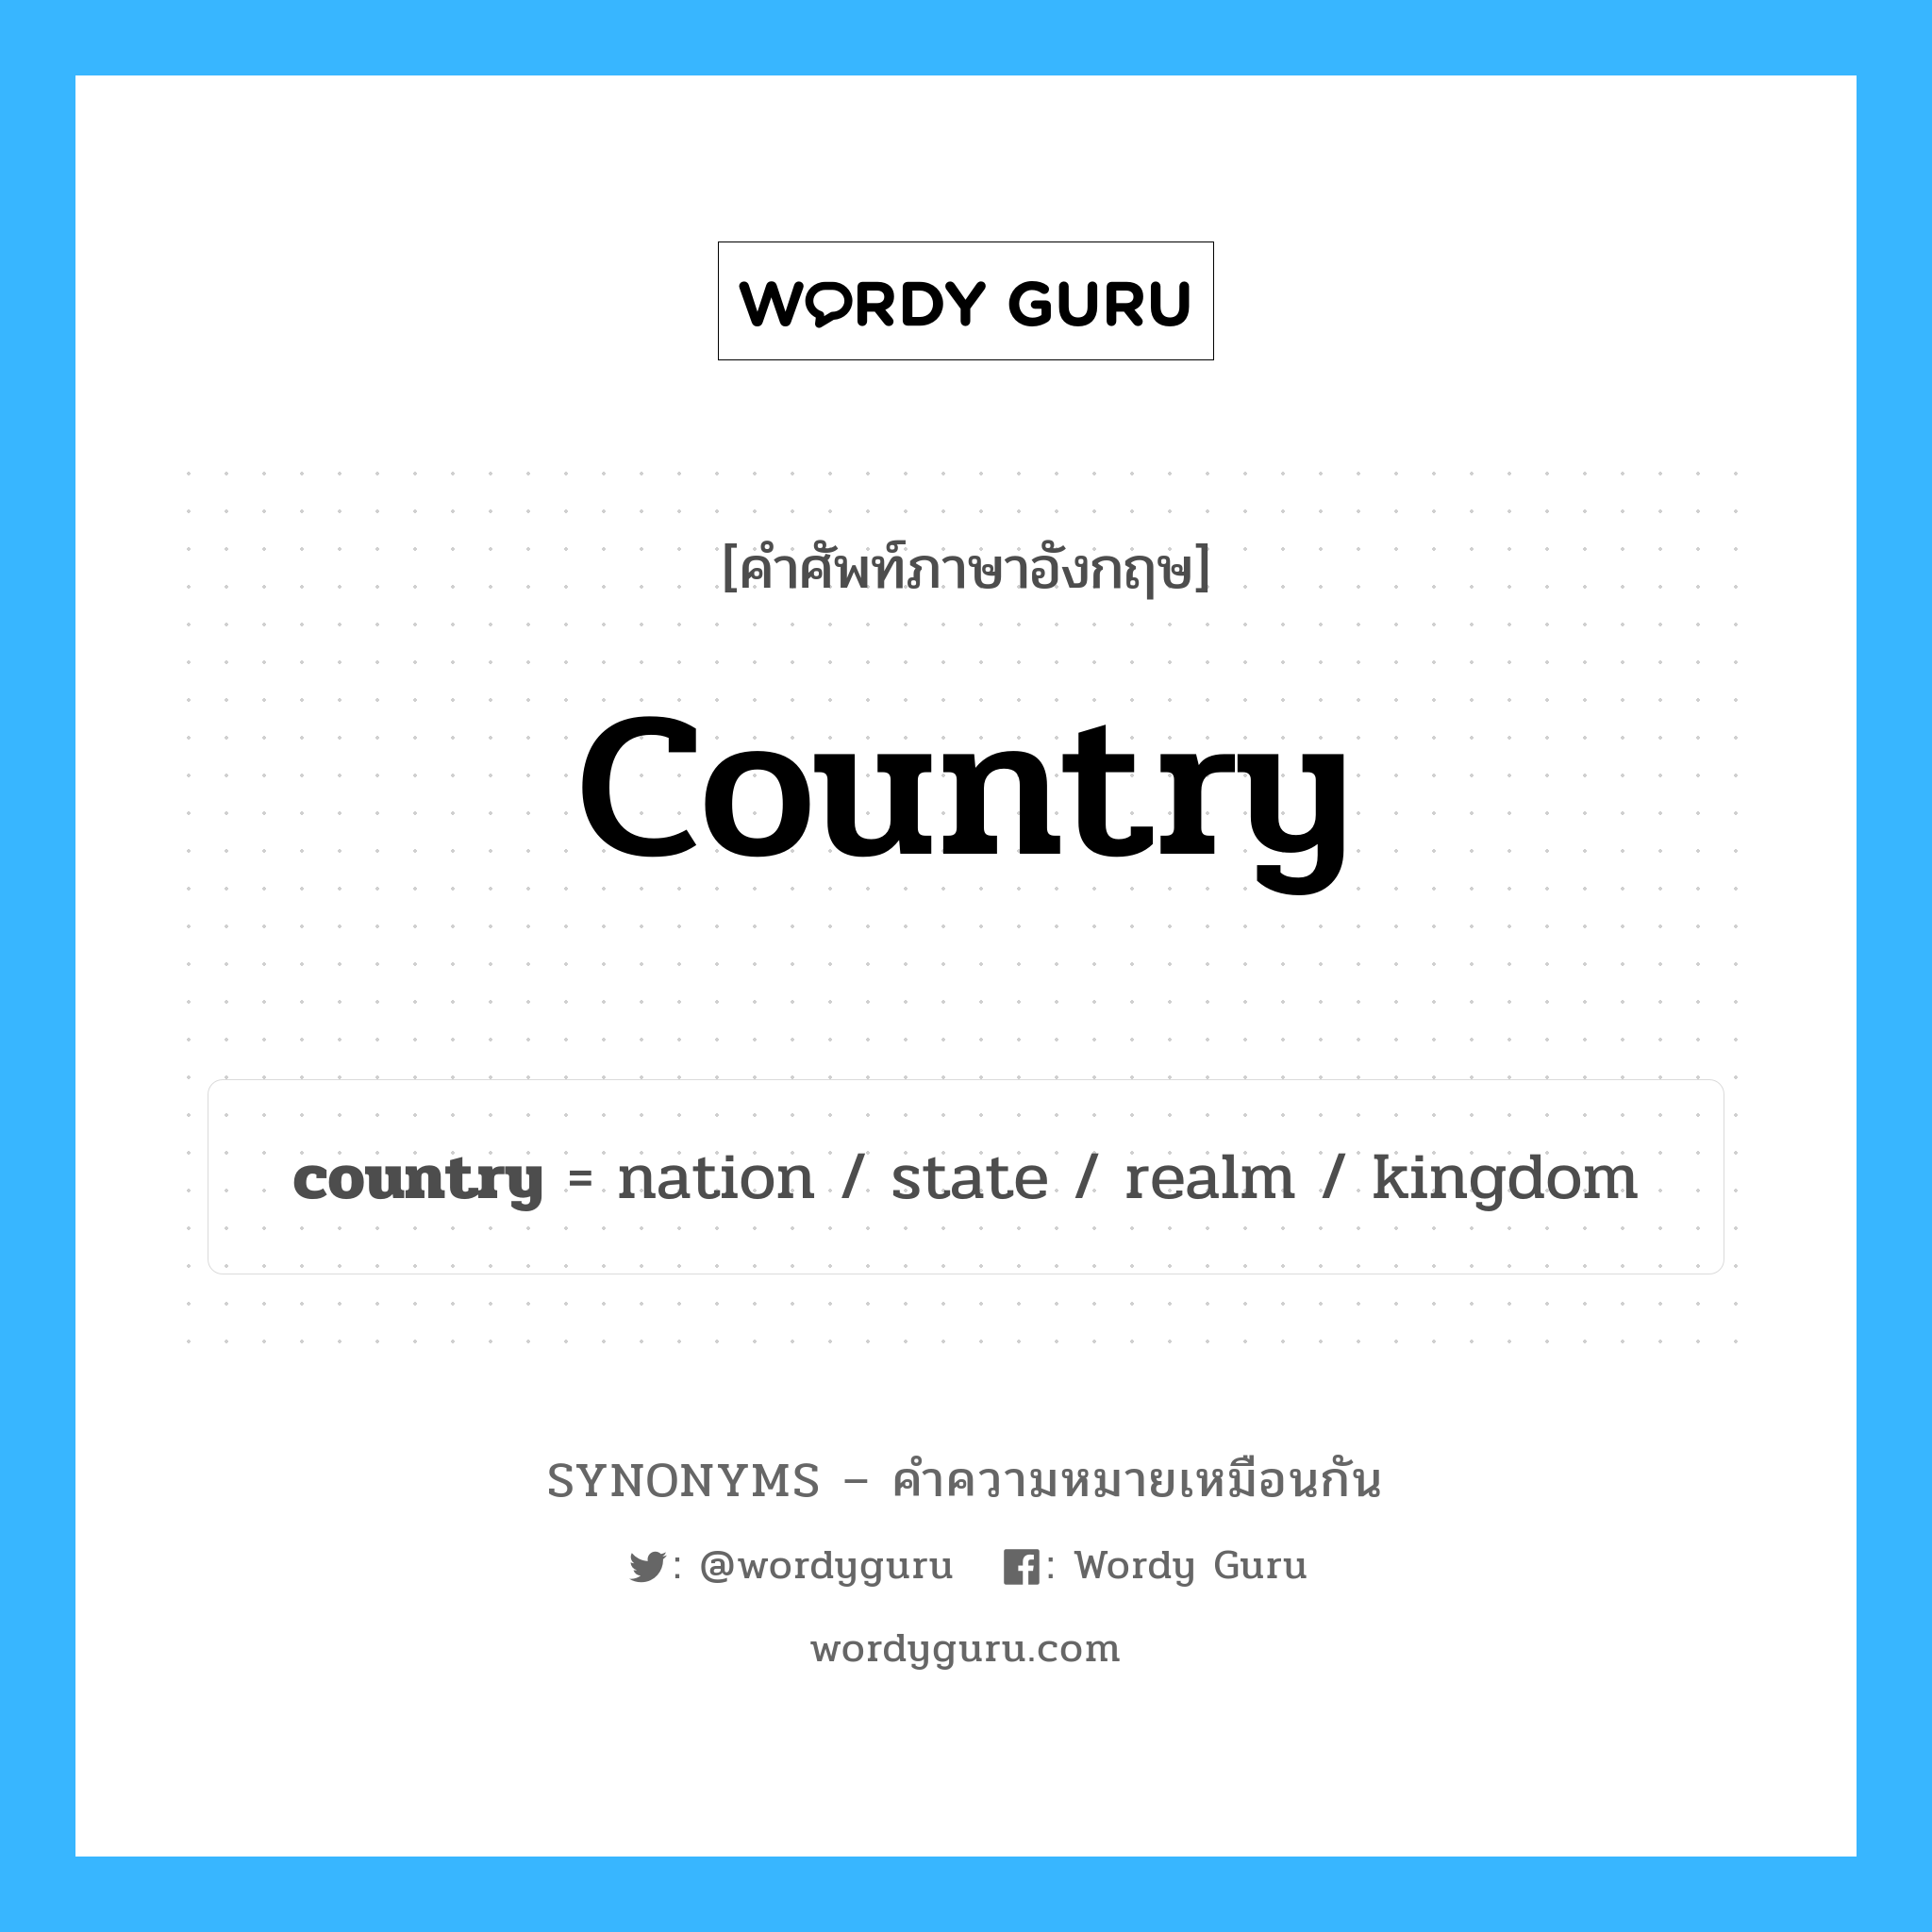 kingdom เป็นหนึ่งใน country และมีคำอื่น ๆ อีกดังนี้, คำศัพท์ภาษาอังกฤษ kingdom ความหมายคล้ายกันกับ country แปลว่า ราชอาณาจักร หมวด country